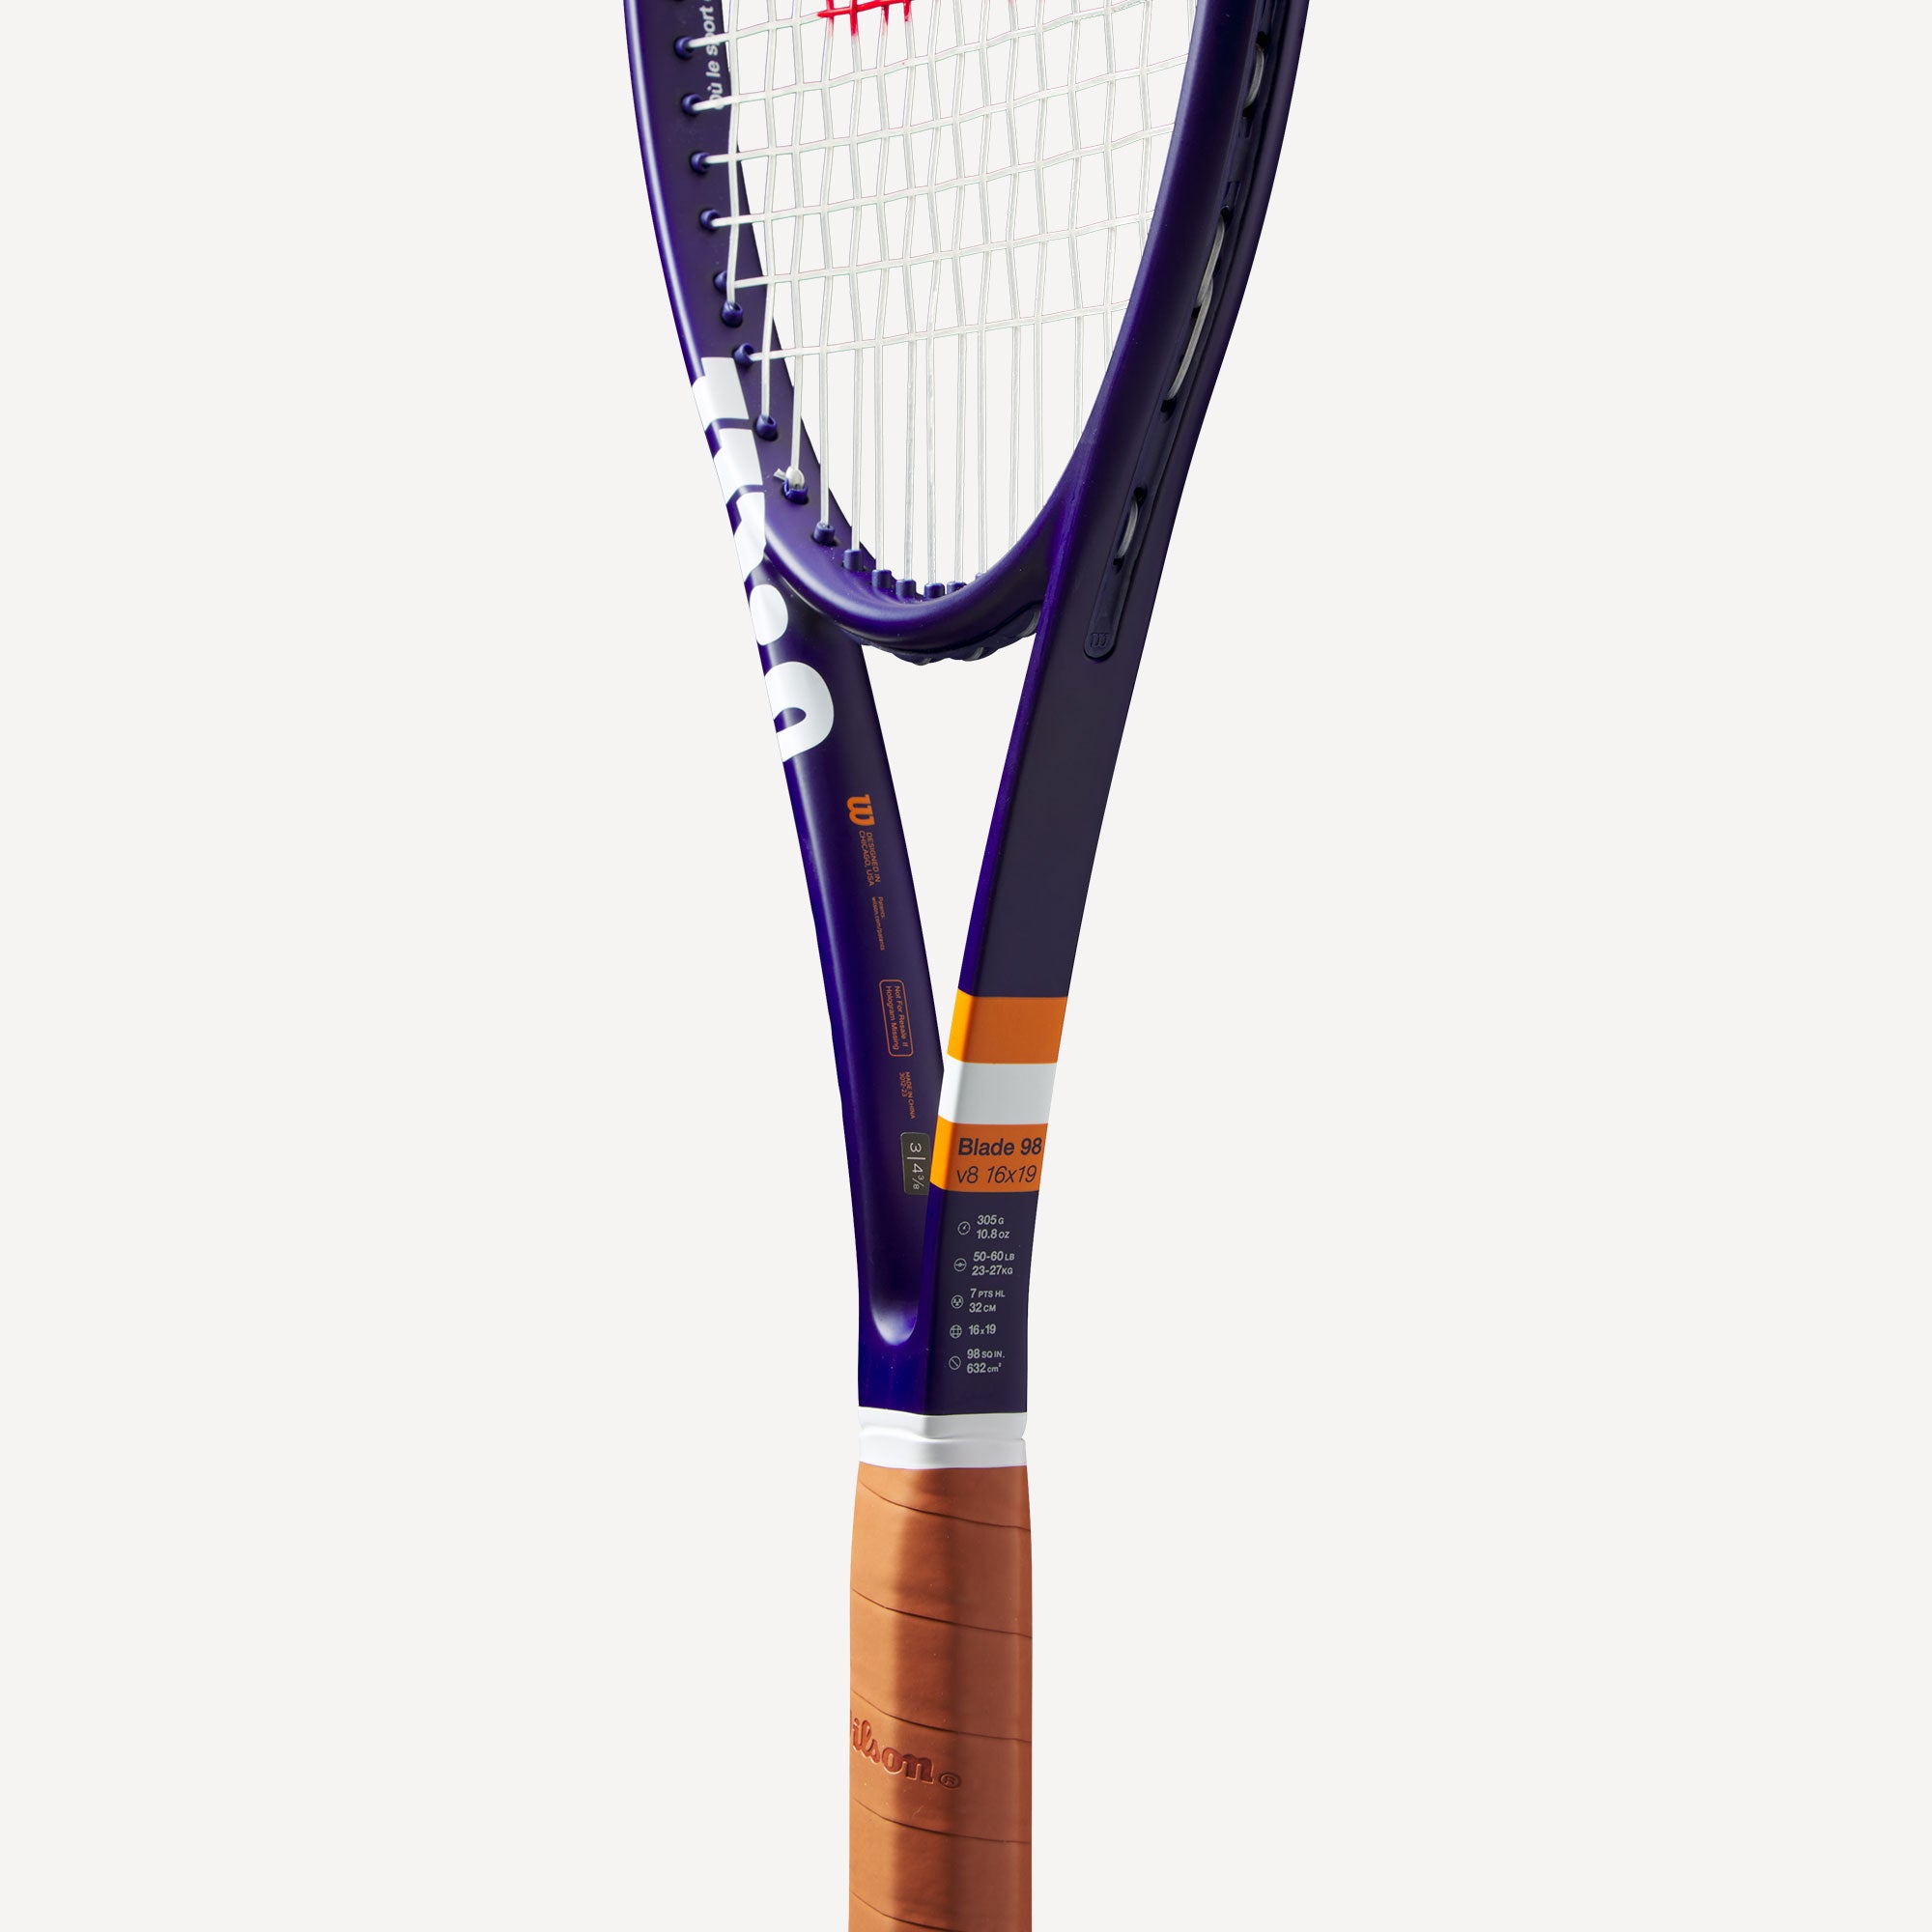 Wilson Roland-Garros Blade 98 16x19 V8 Tennis Racket (6)